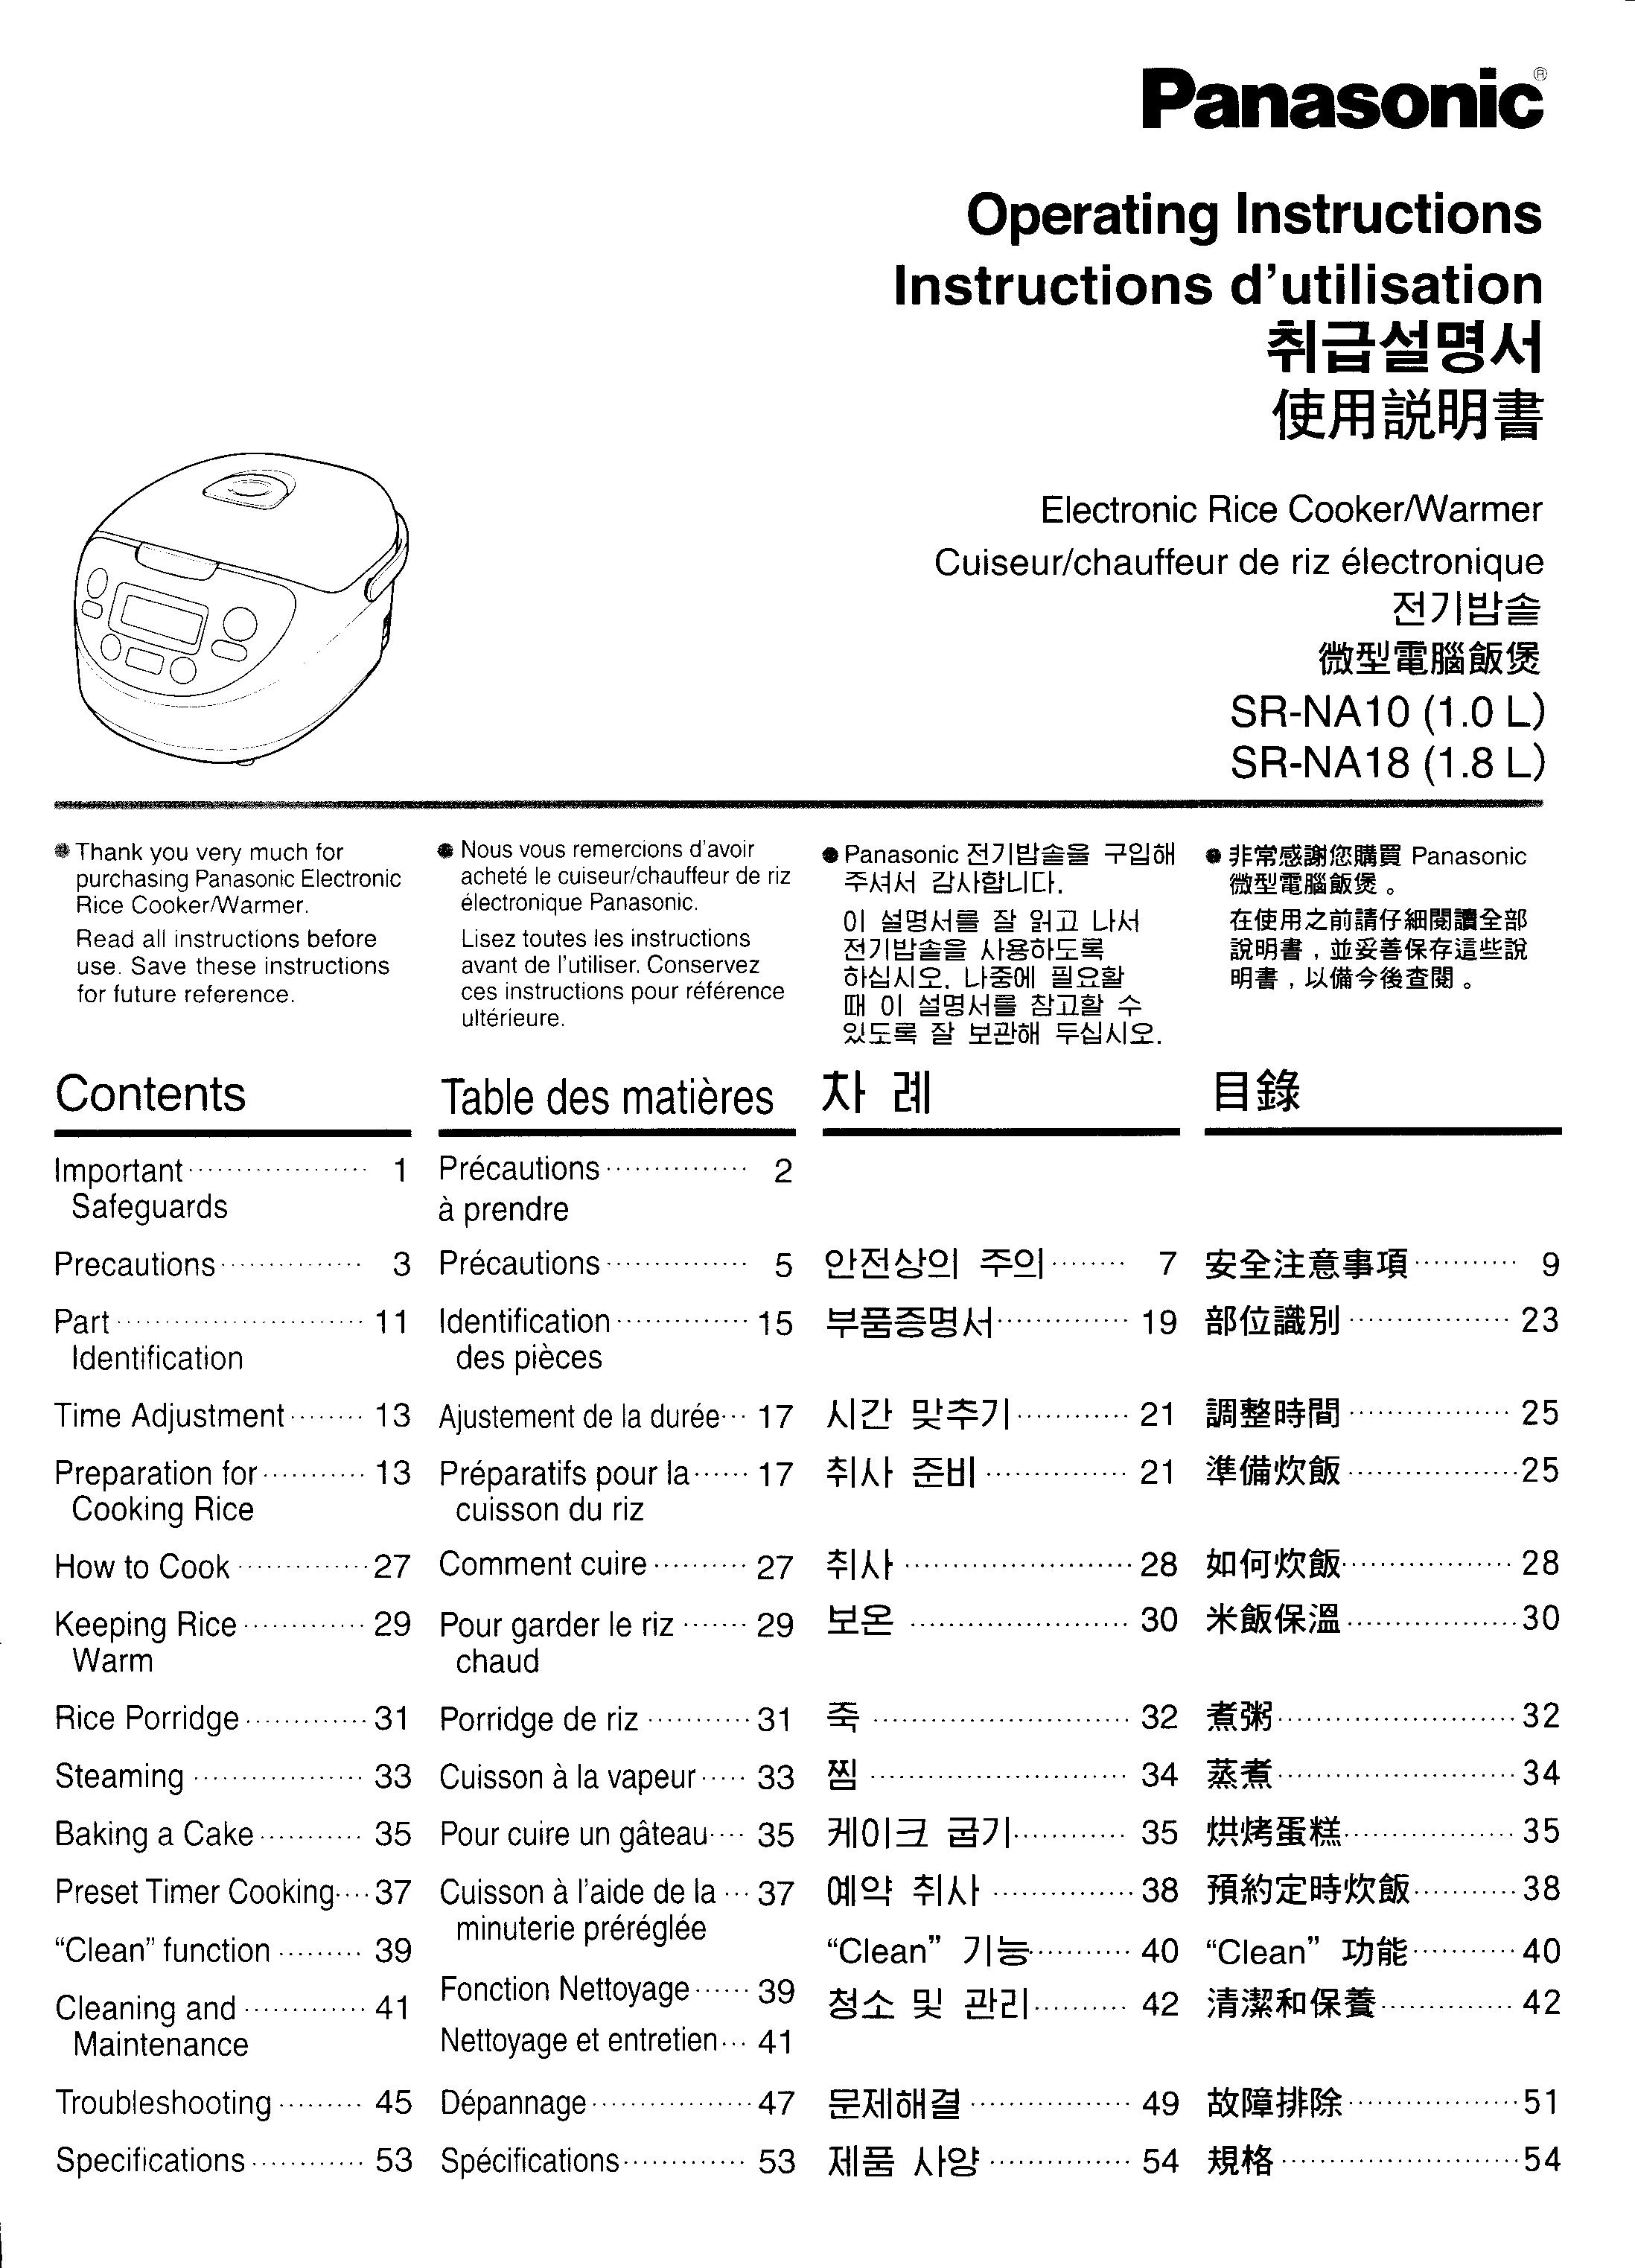 Panasonic SR-NA10 Rice Cooker User Manual